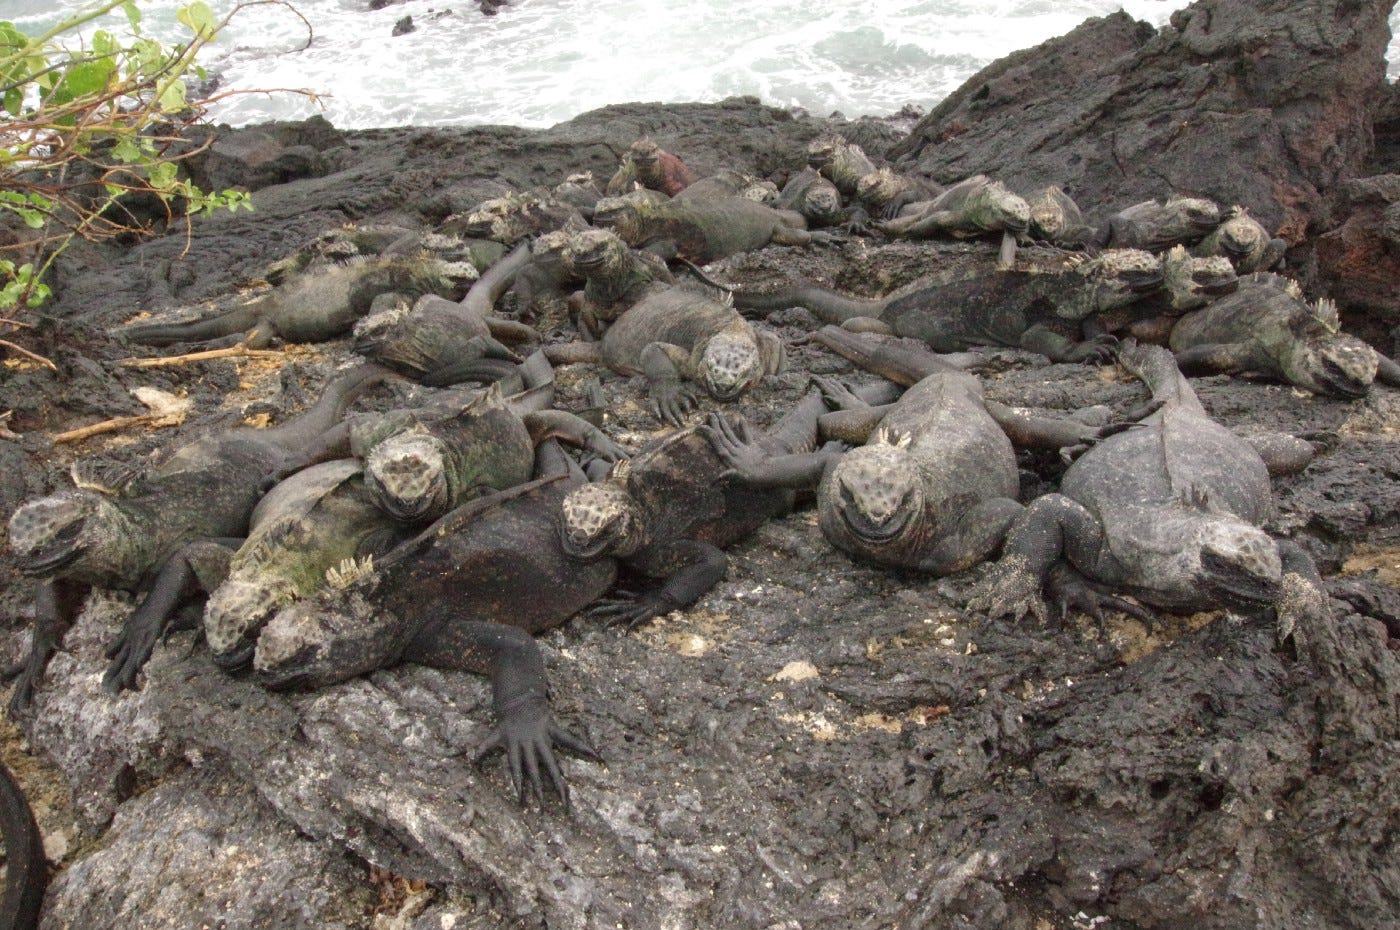 Pile o' marine iguanas. Photo by Bret, March 2016.